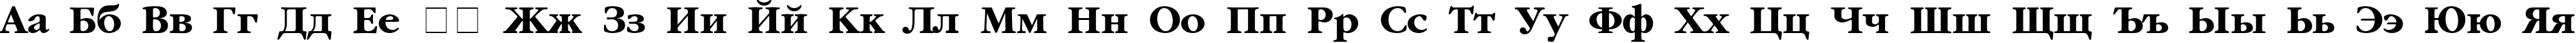 Пример написания русского алфавита шрифтом AG_Garamond Bold